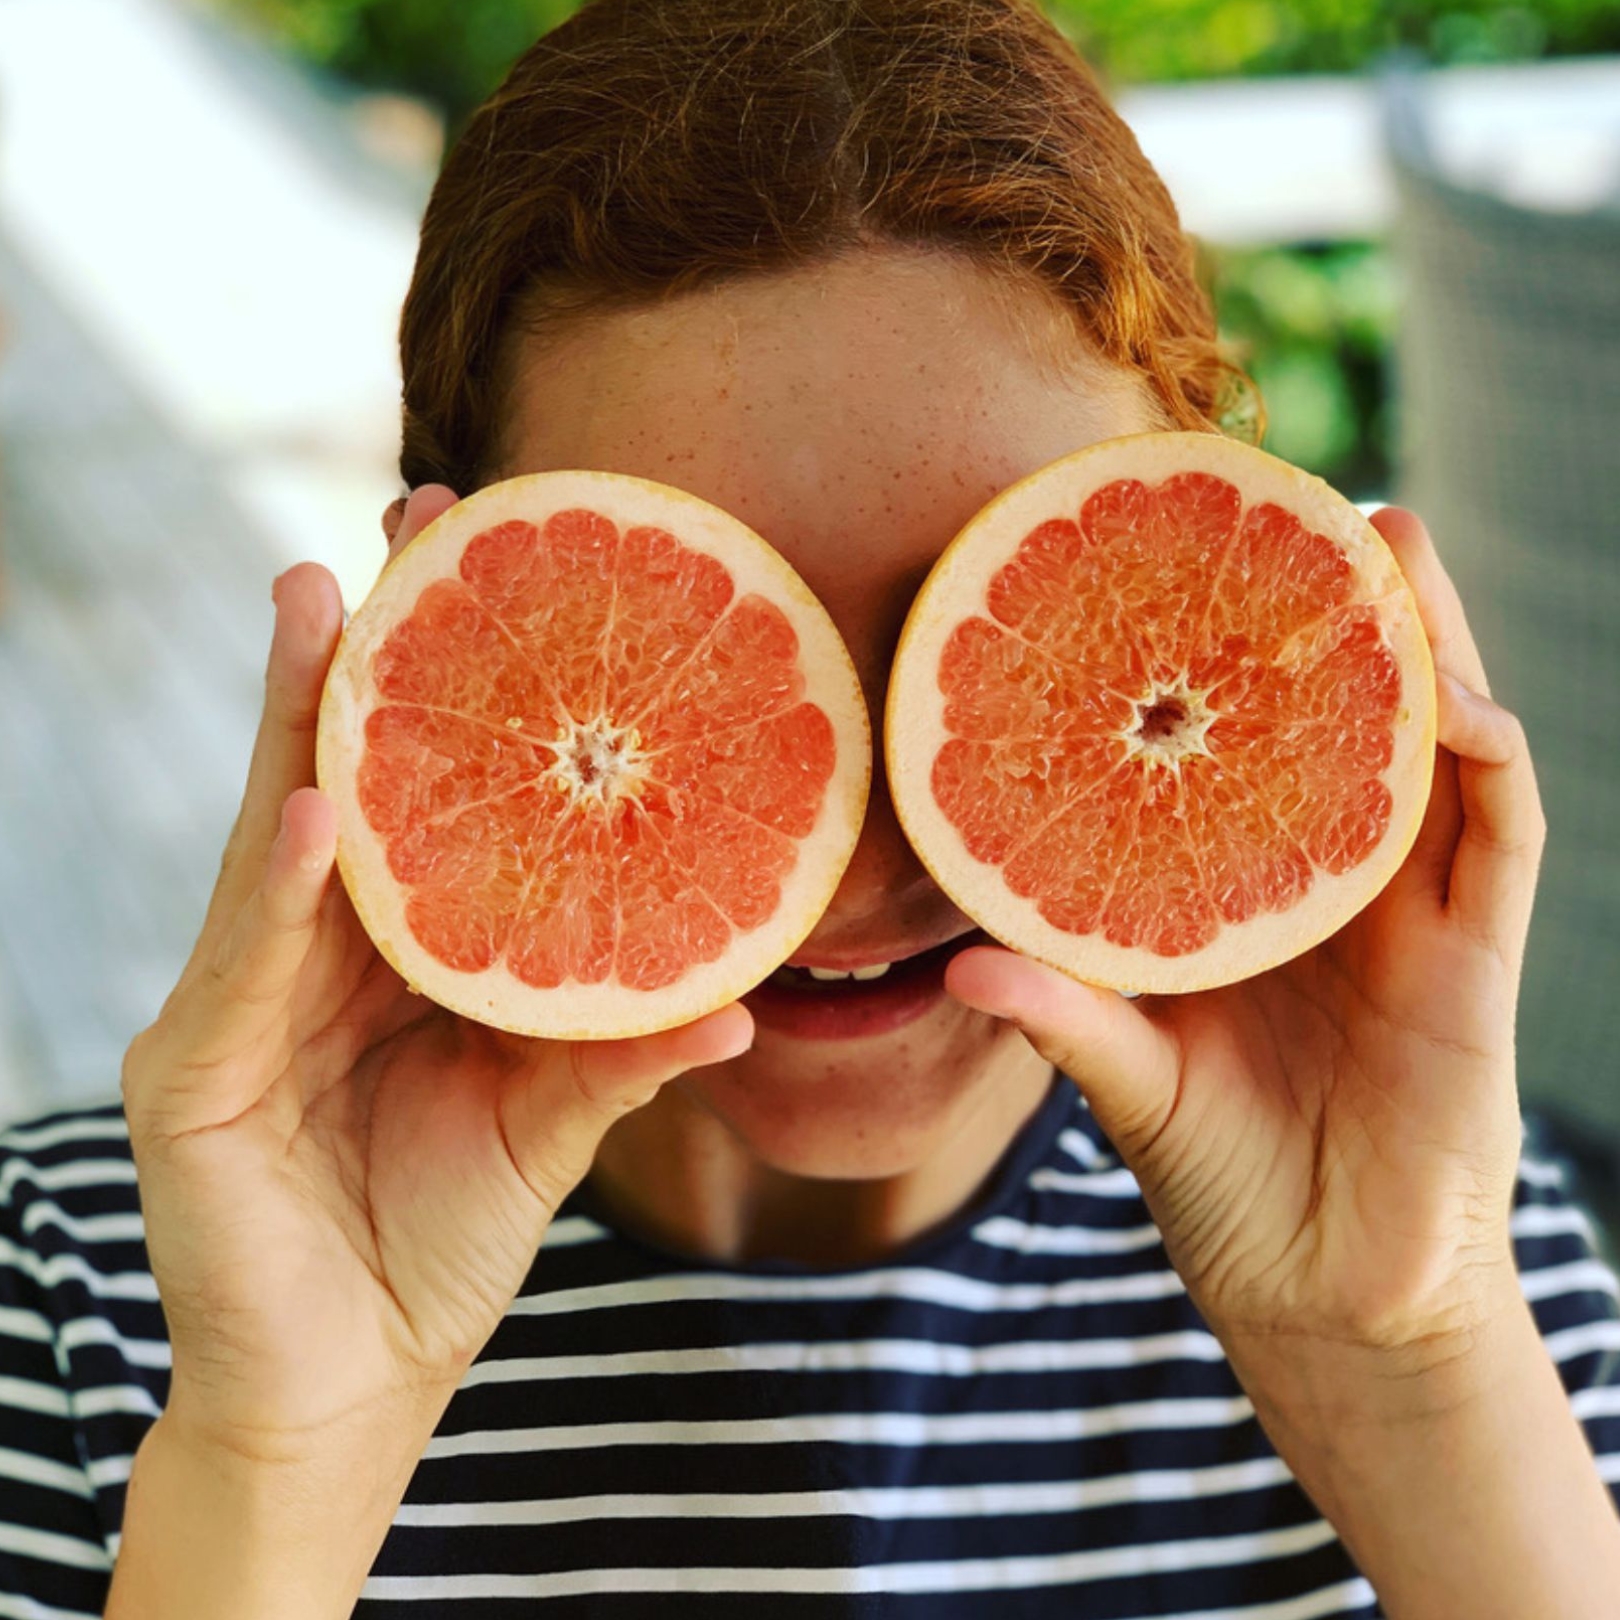 Buy Grapefruit - Star Ruby Online NZ